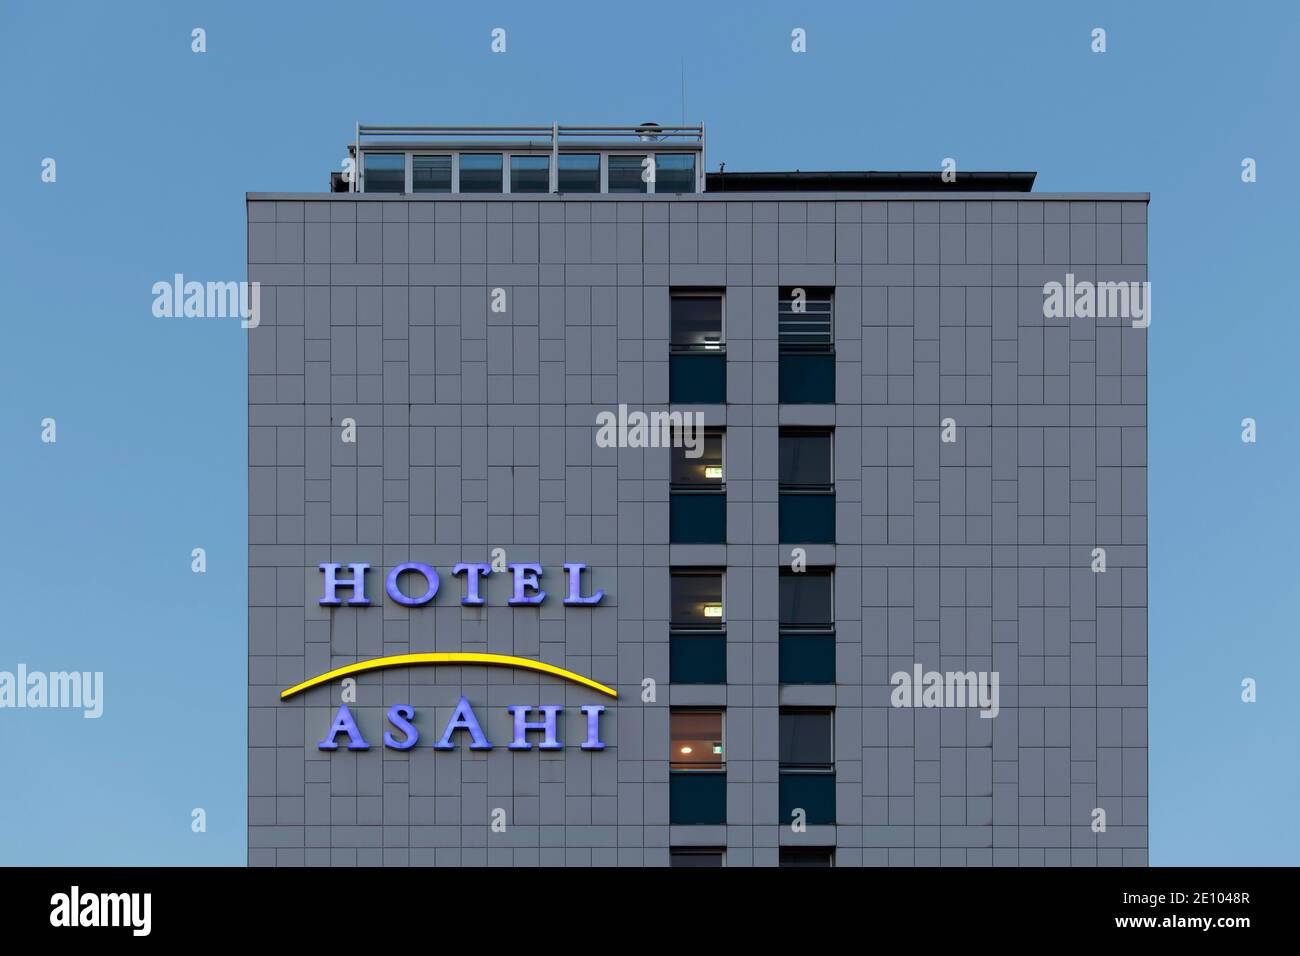 Asahi Hotel, illuminated lettering on the building, business hotel in the Japanese quarter of Düsseldorf, North Rhine-Westphalia, Germany, Europe Stock Photo